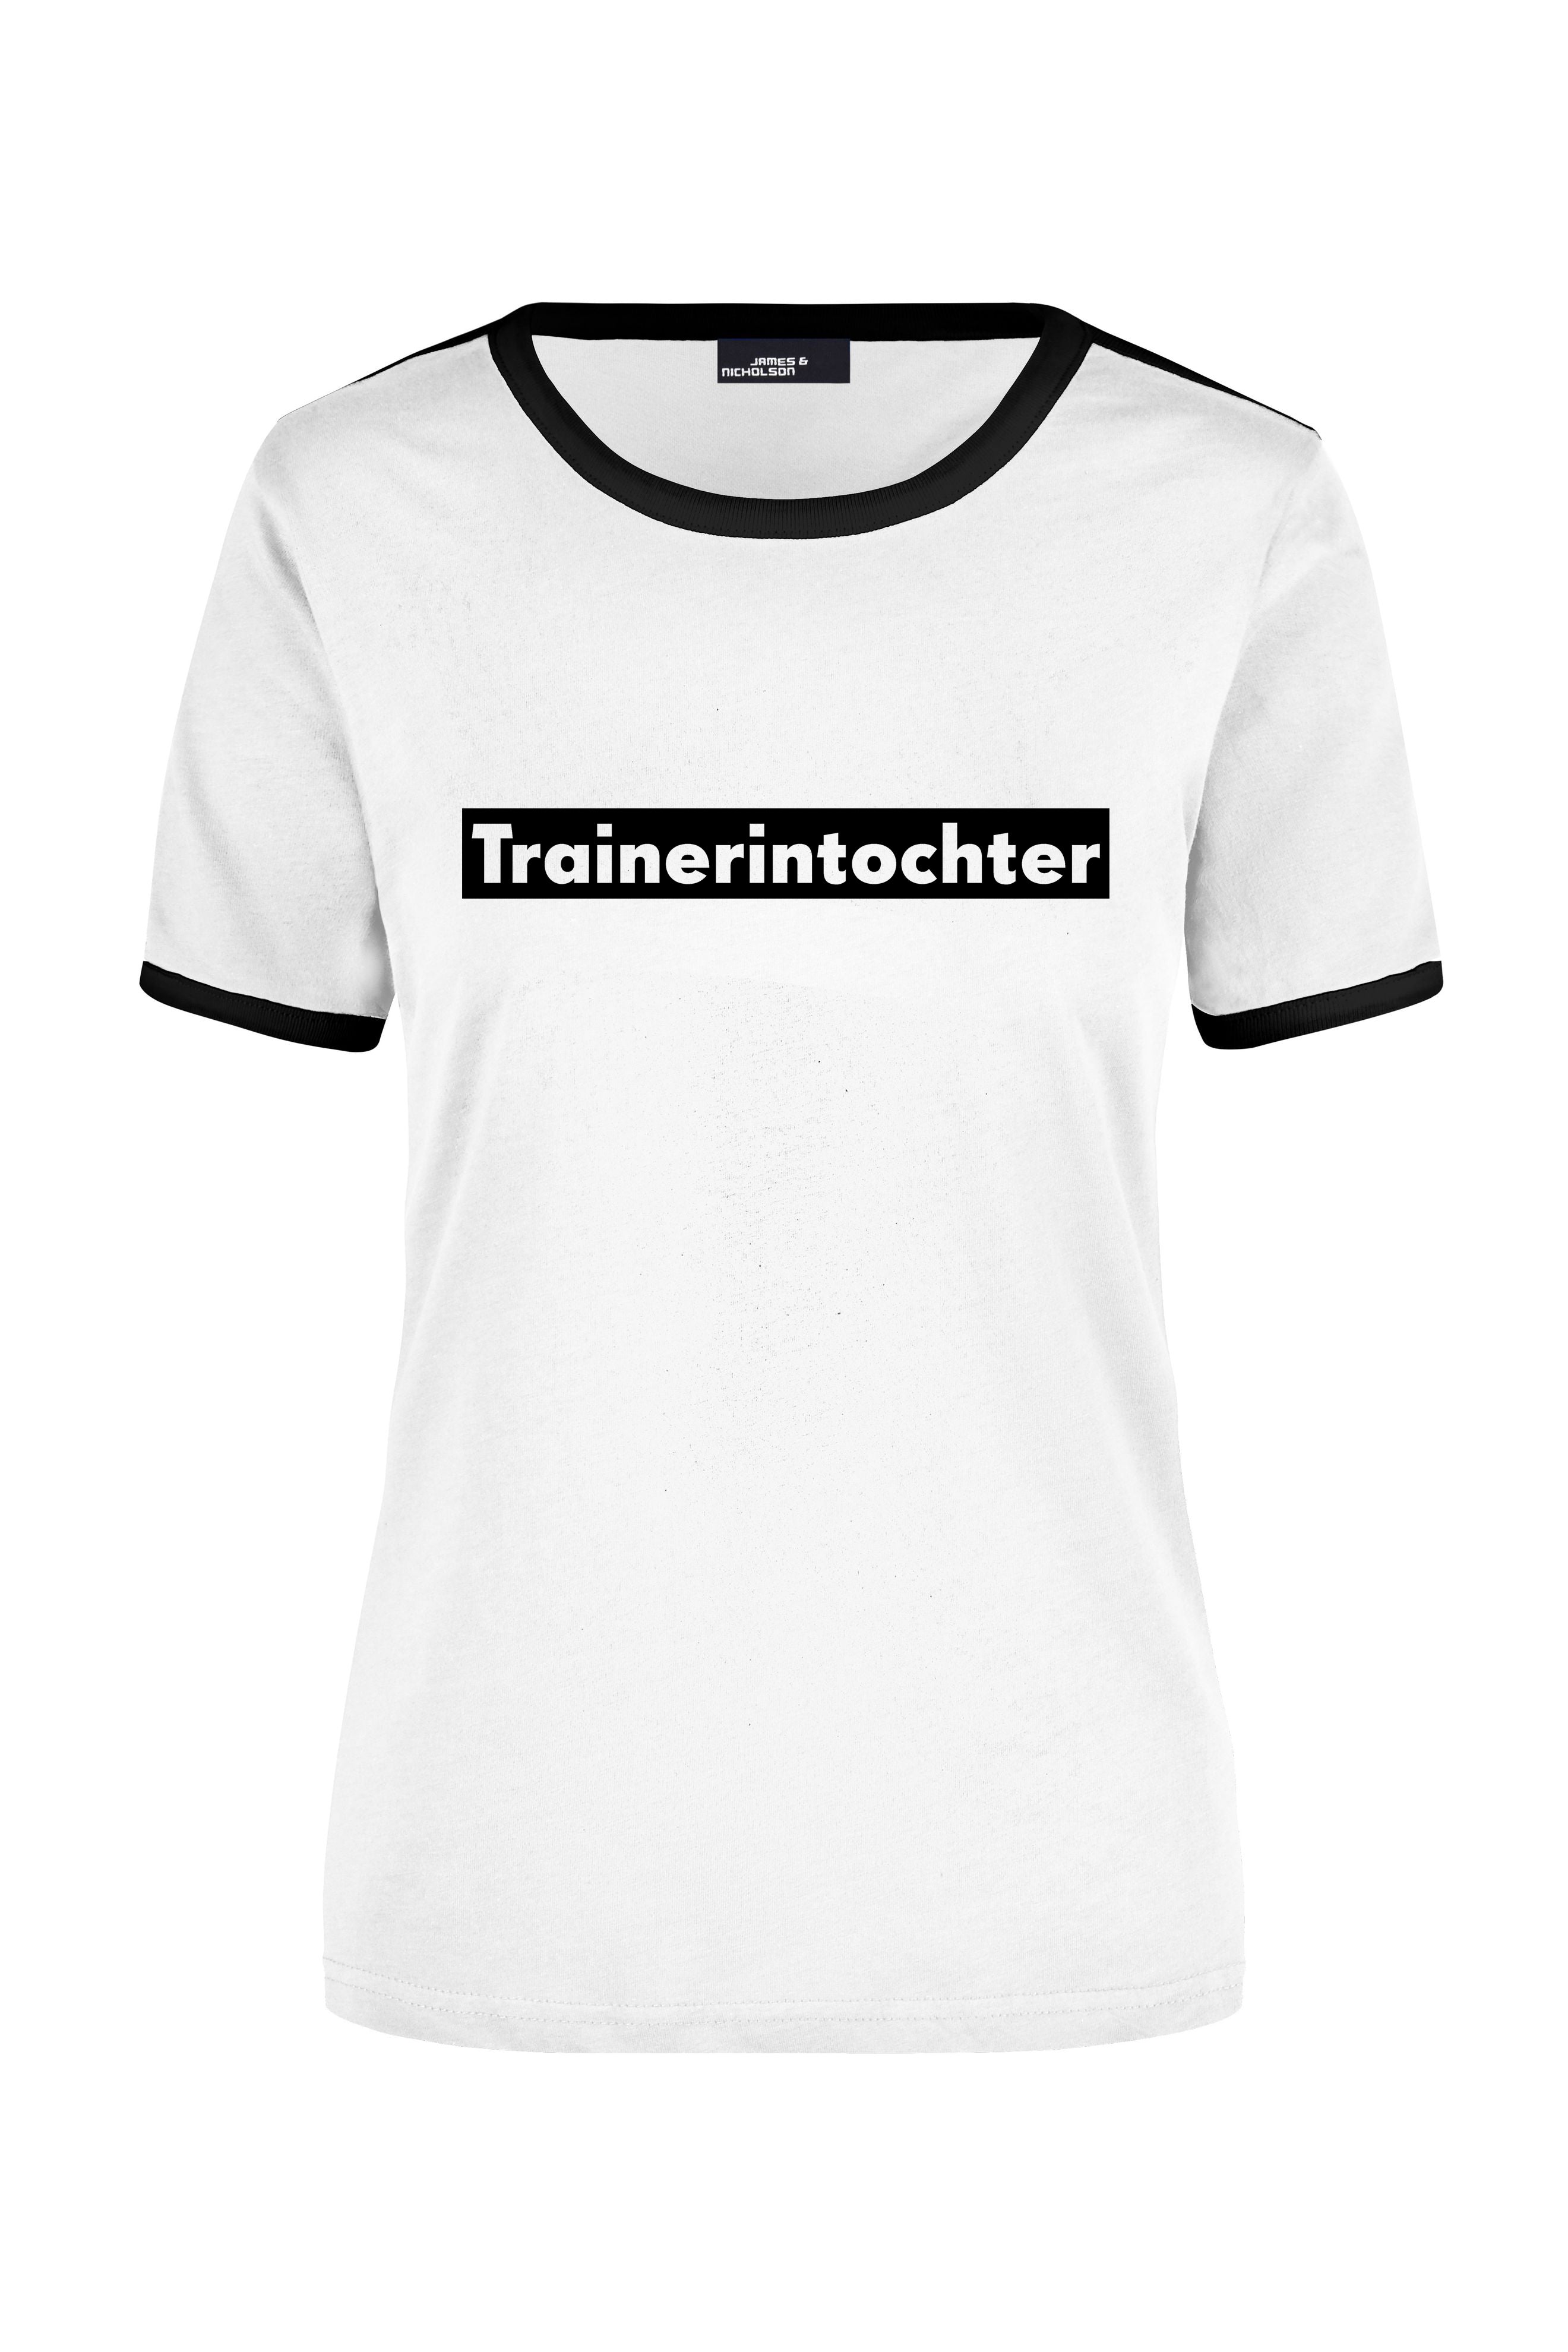 T-Shirt "Trainerintochter"